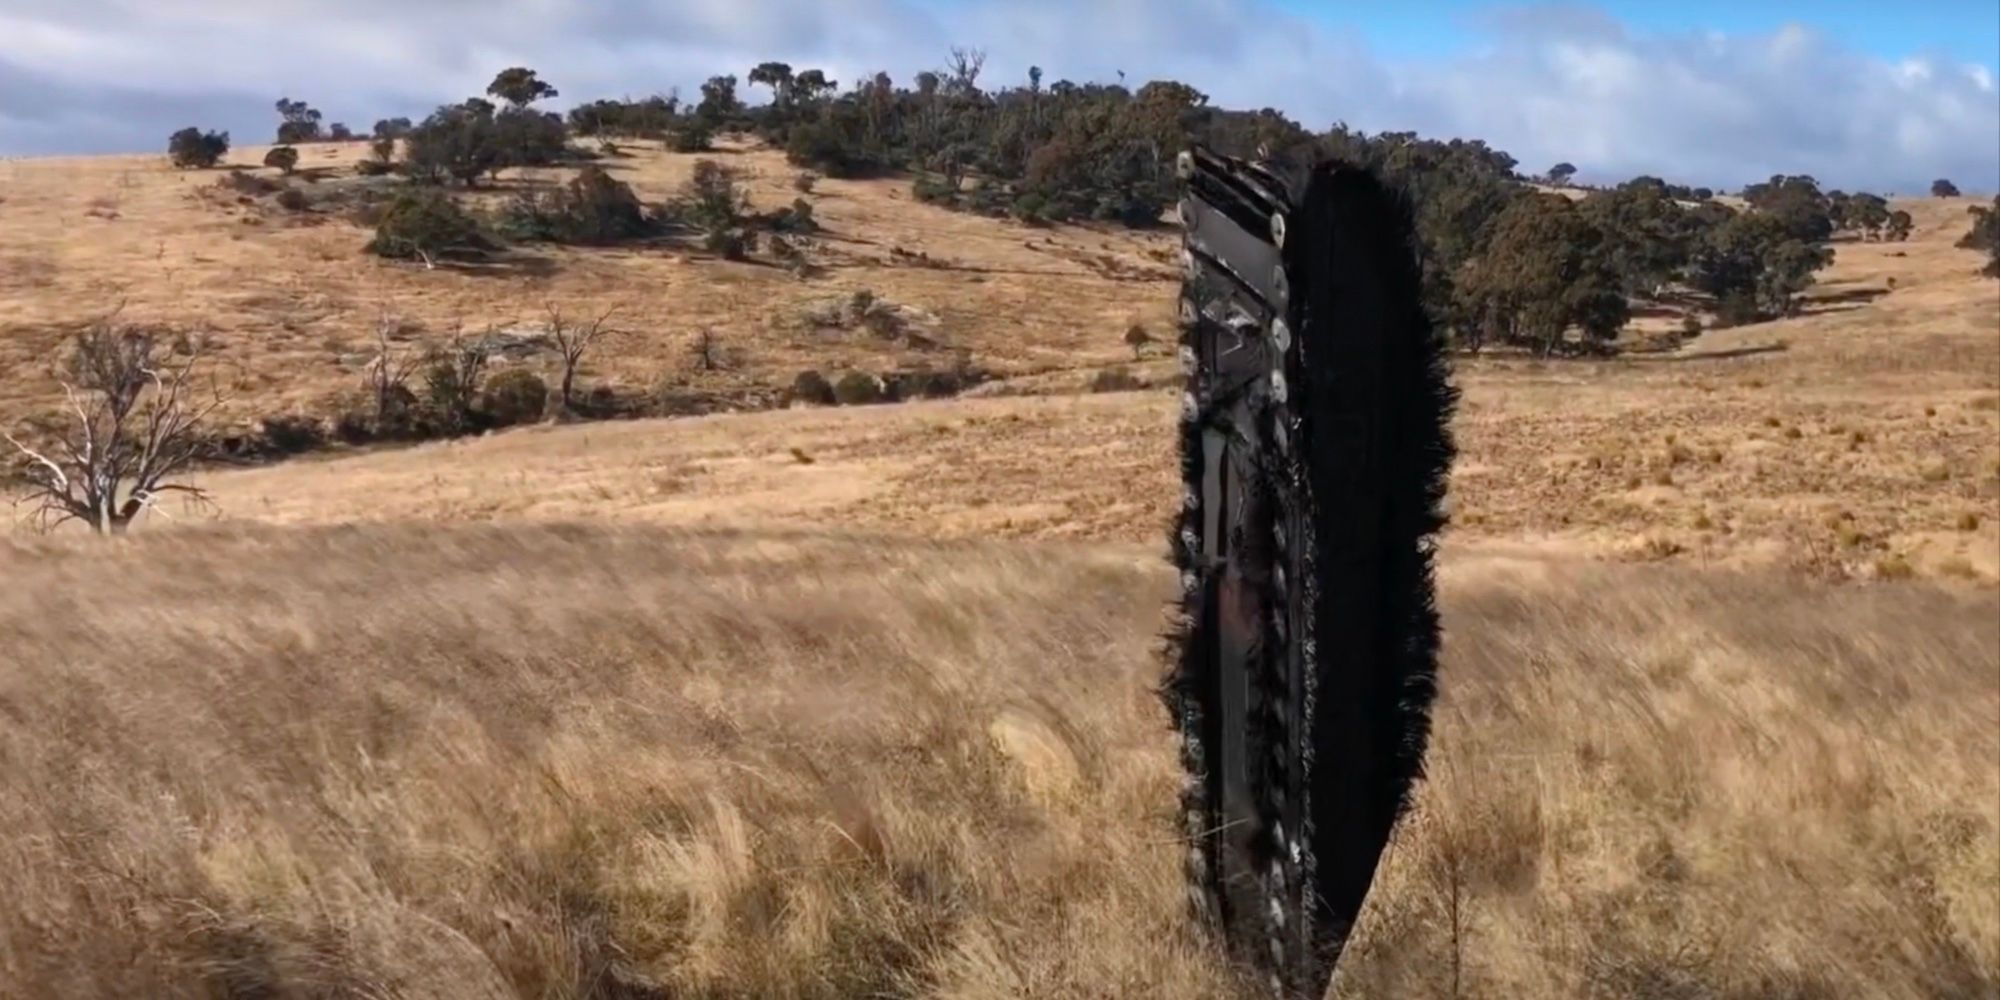 SpaceX Capsule Debris In Australia (Credit: Dr Brad Tucker/YouTube)